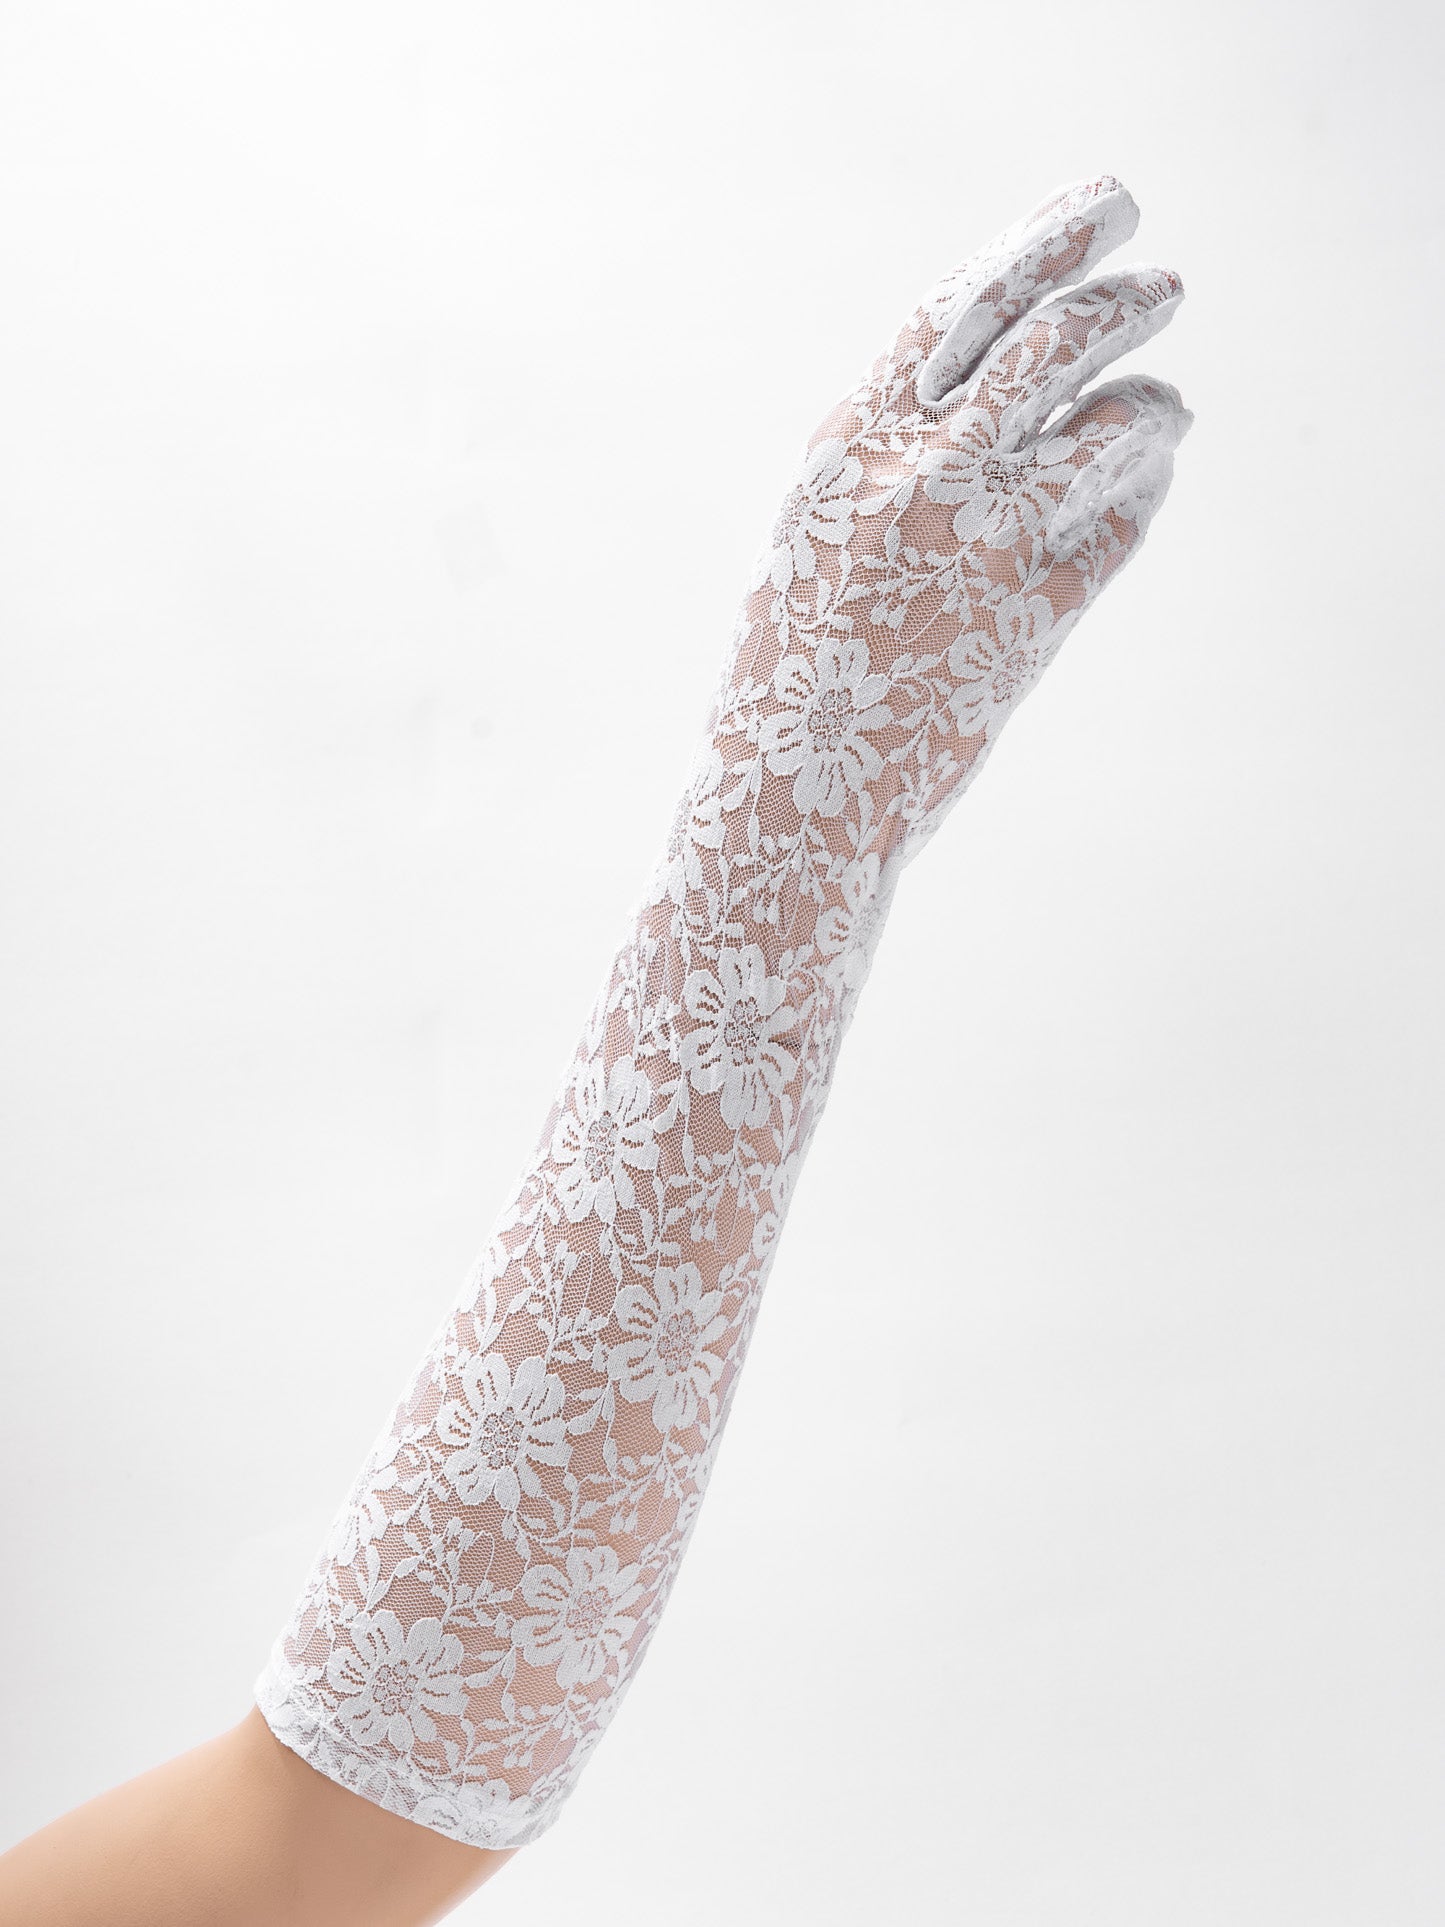 Nova Lace Long Glove with Flowers